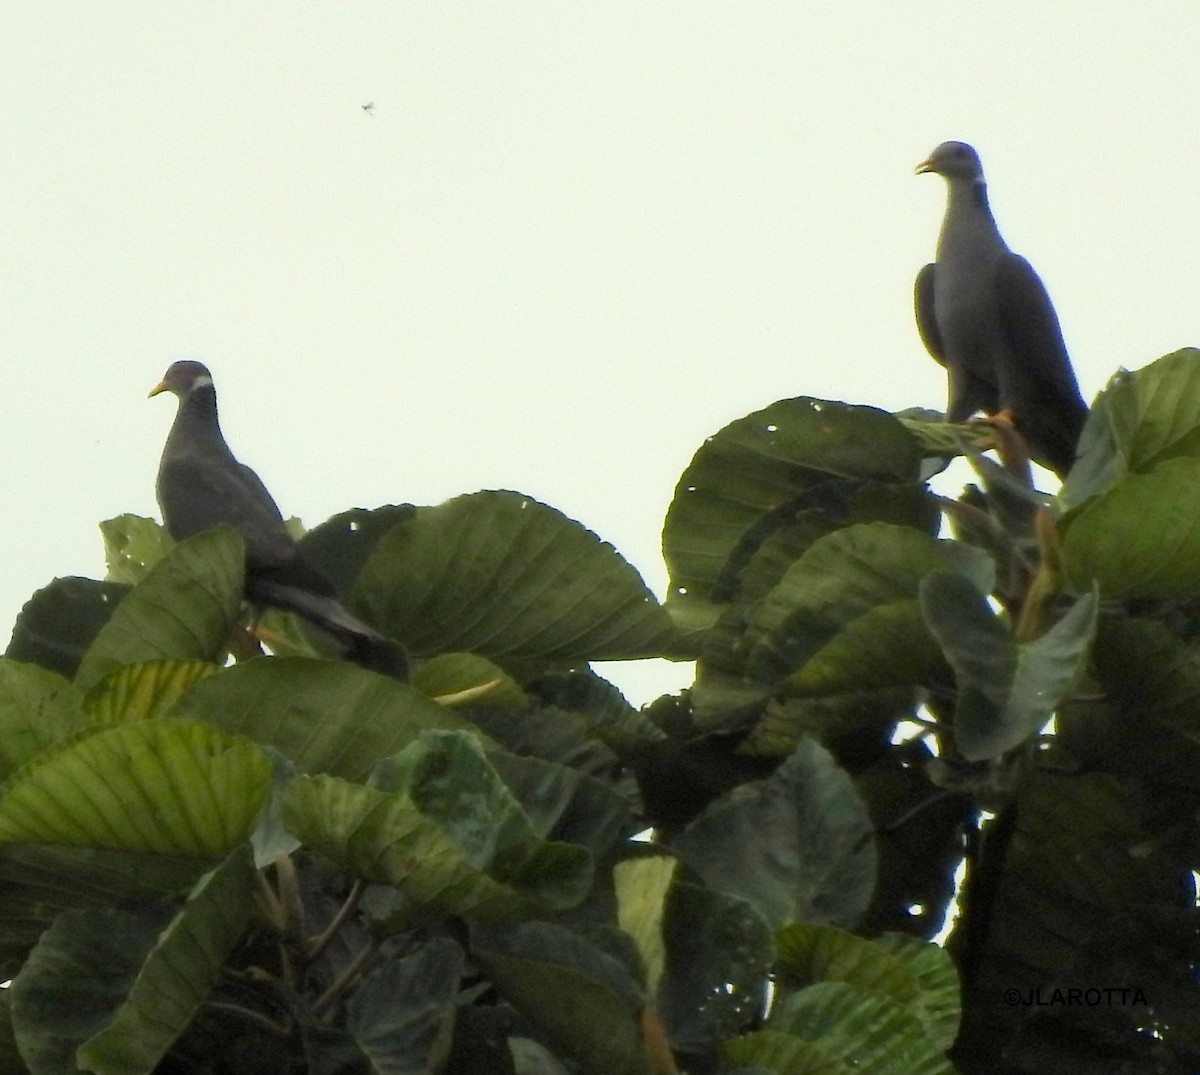 Band-tailed Pigeon - Jorge La Rotta